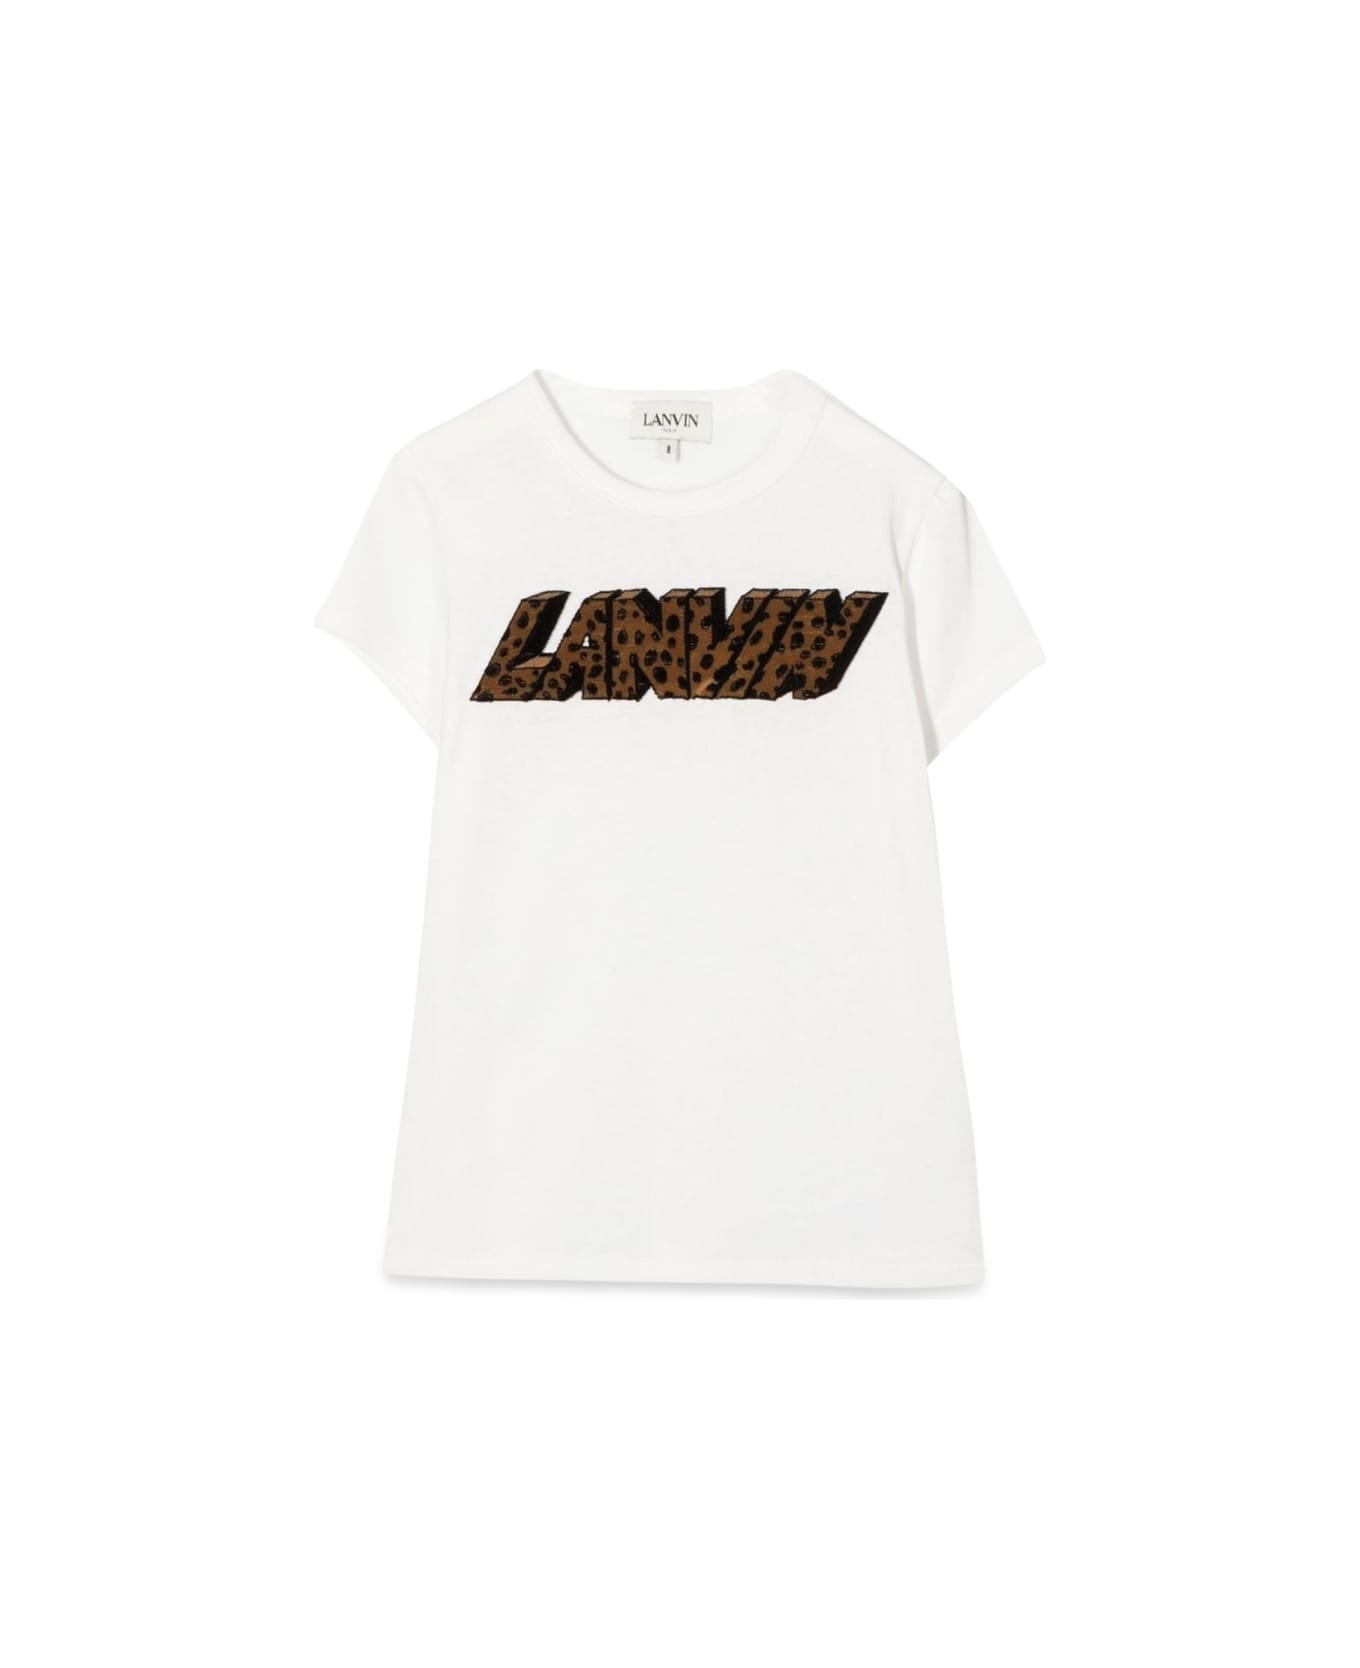 Lanvin Short Sleeve Spotted Logo T-shirt - IVORY